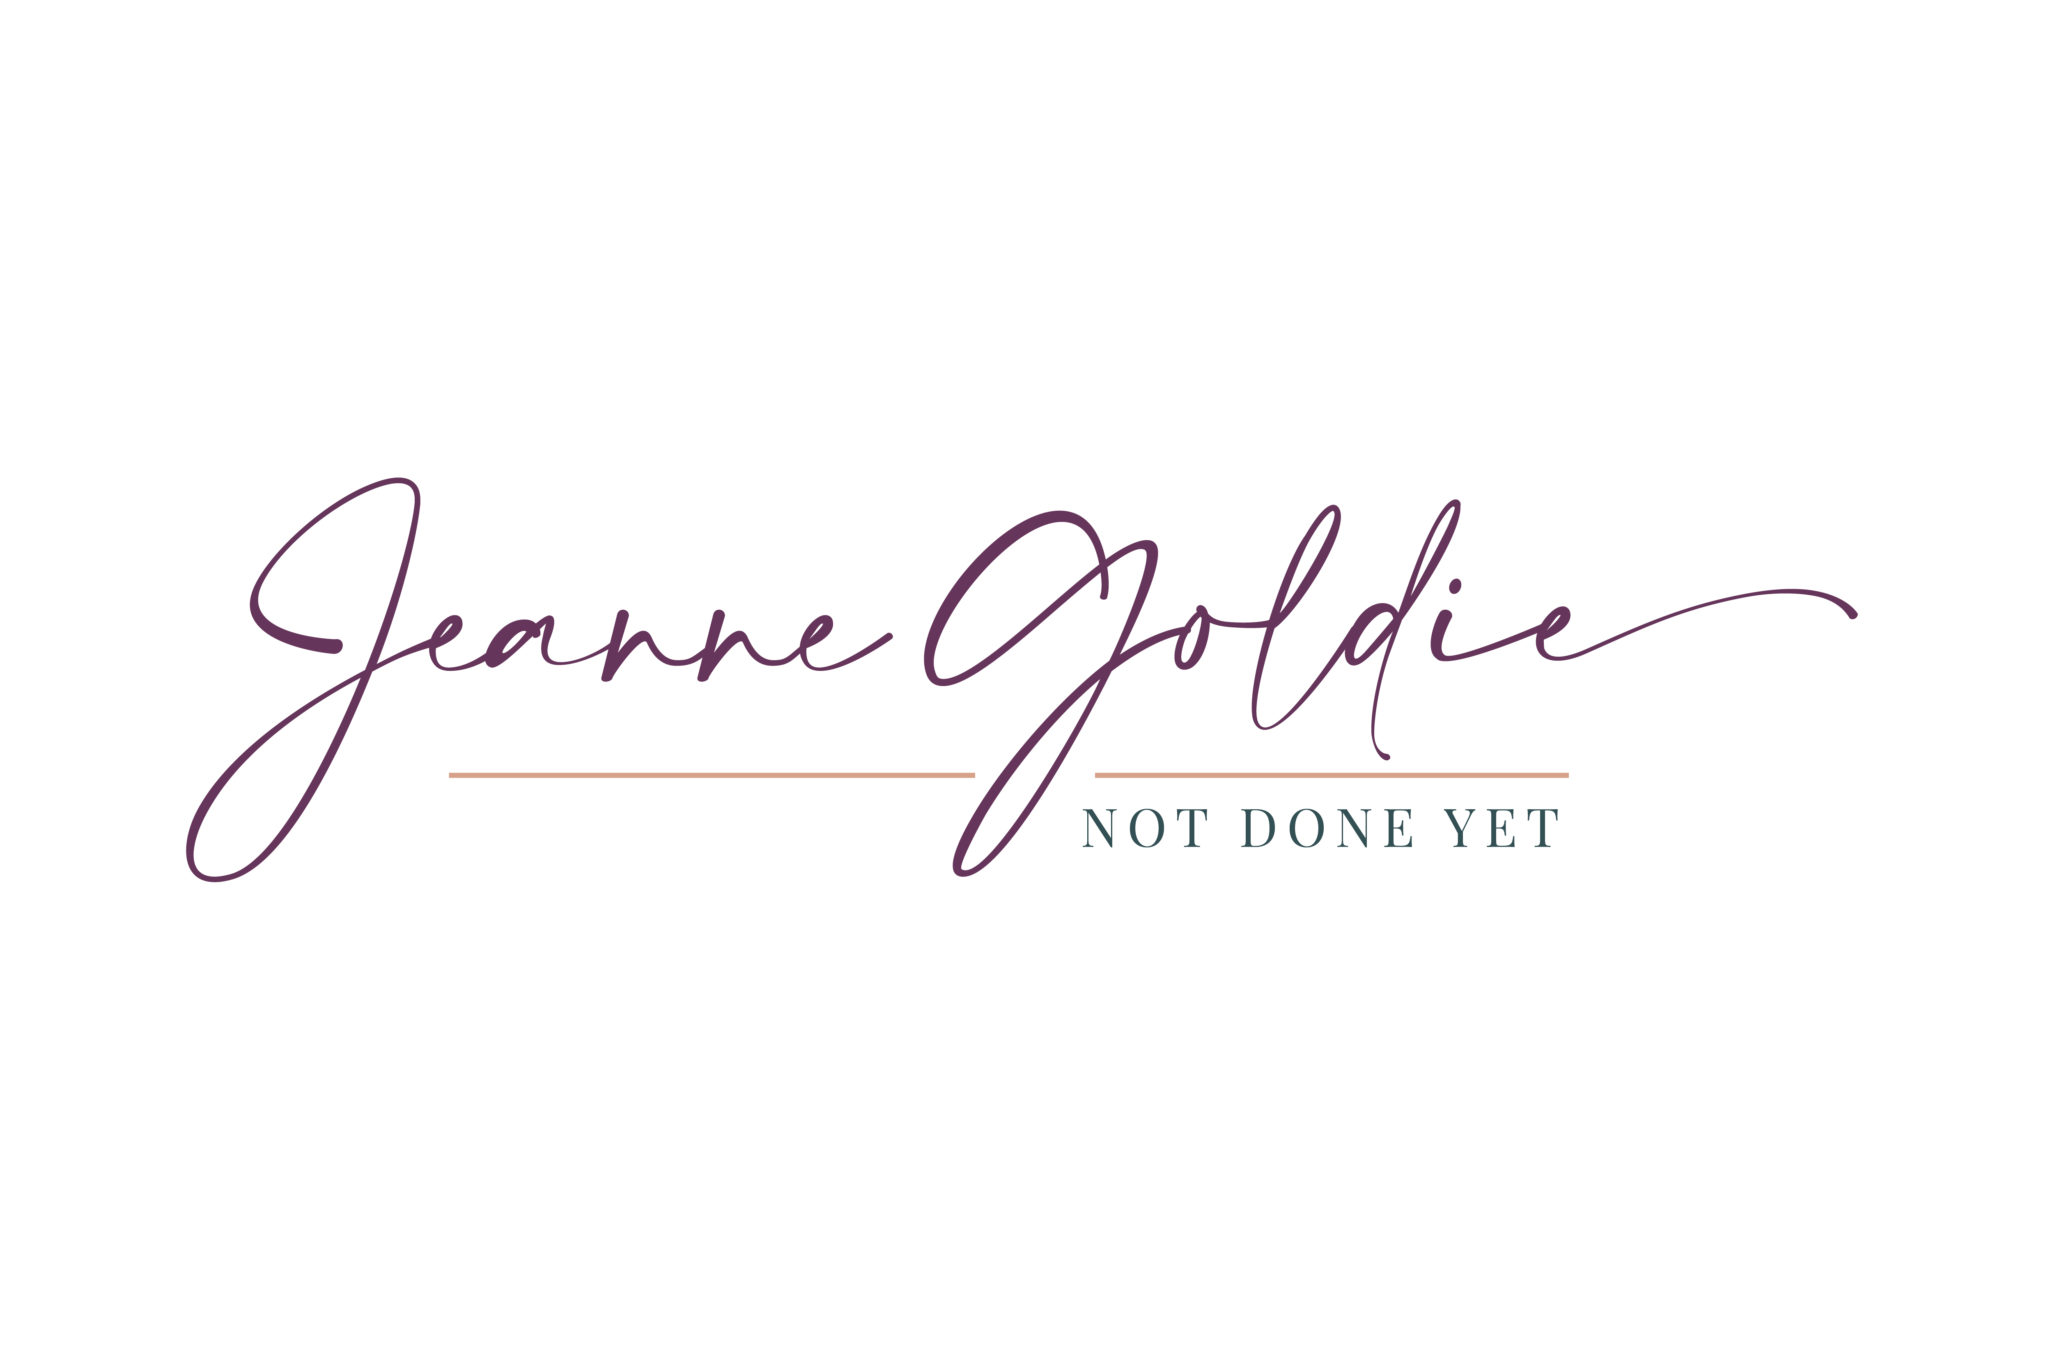 Find Jeanne Goldie publications and websites | 52 Week Turnaround